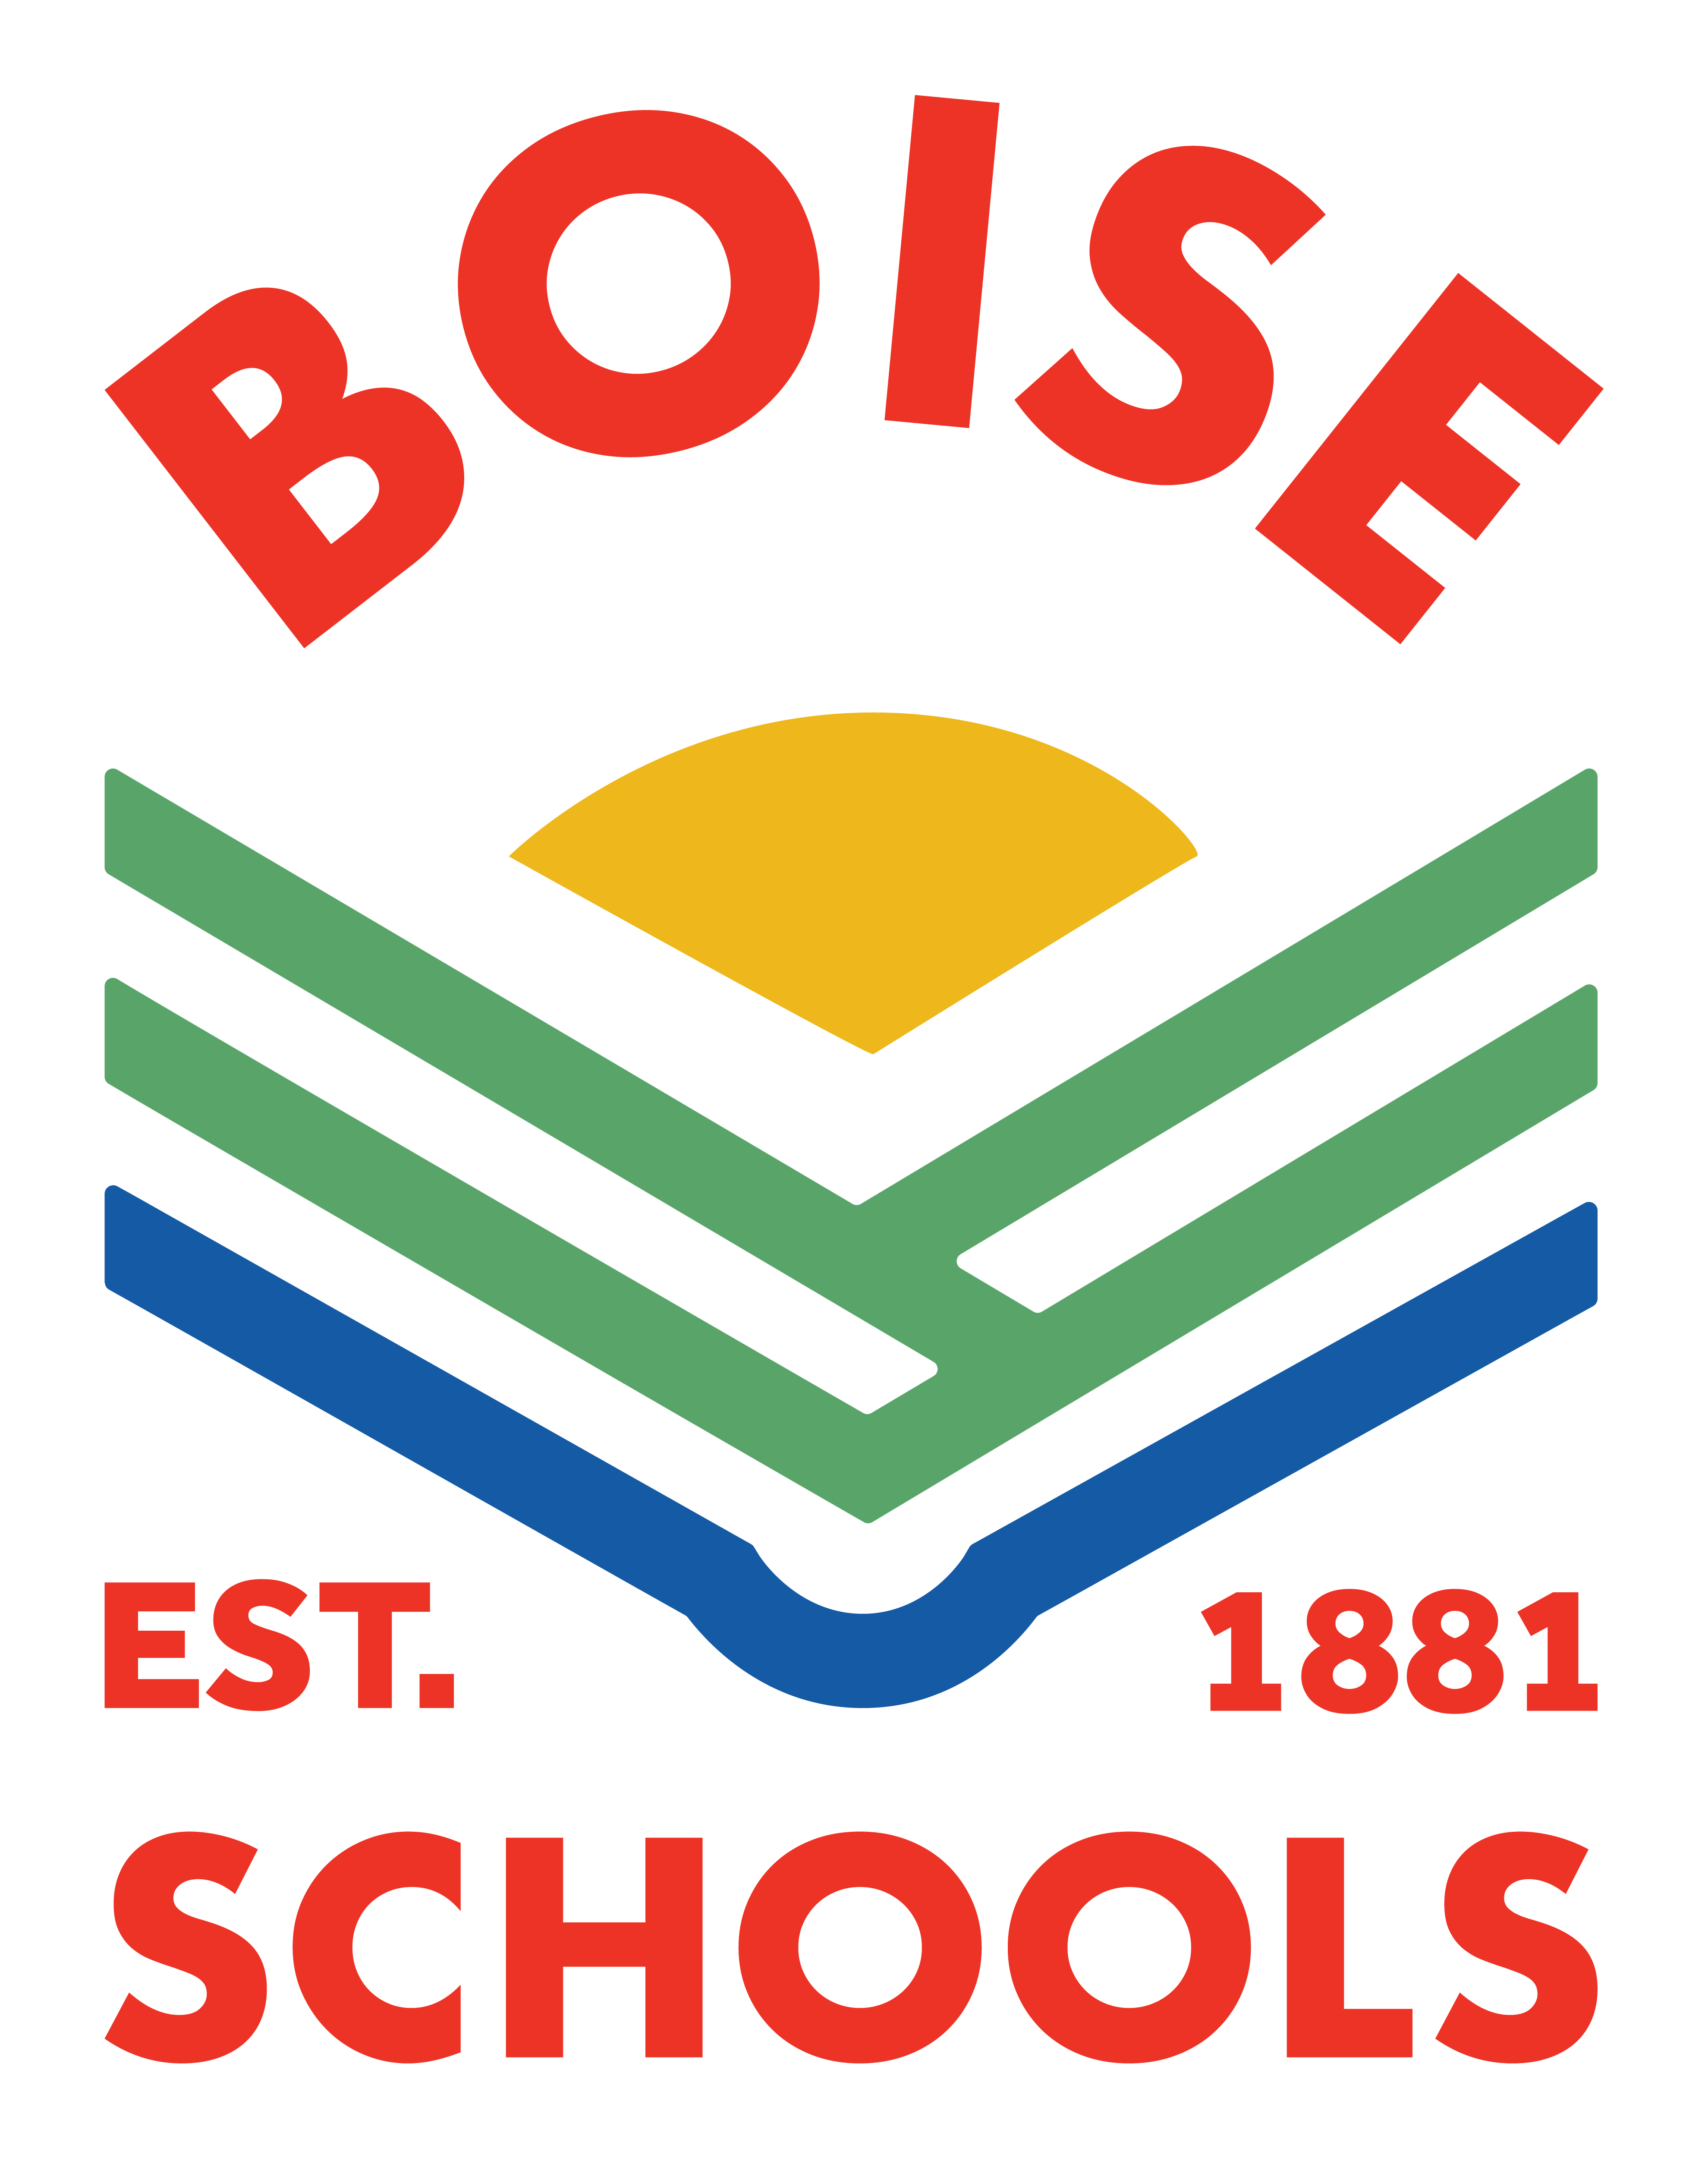 Boise School District